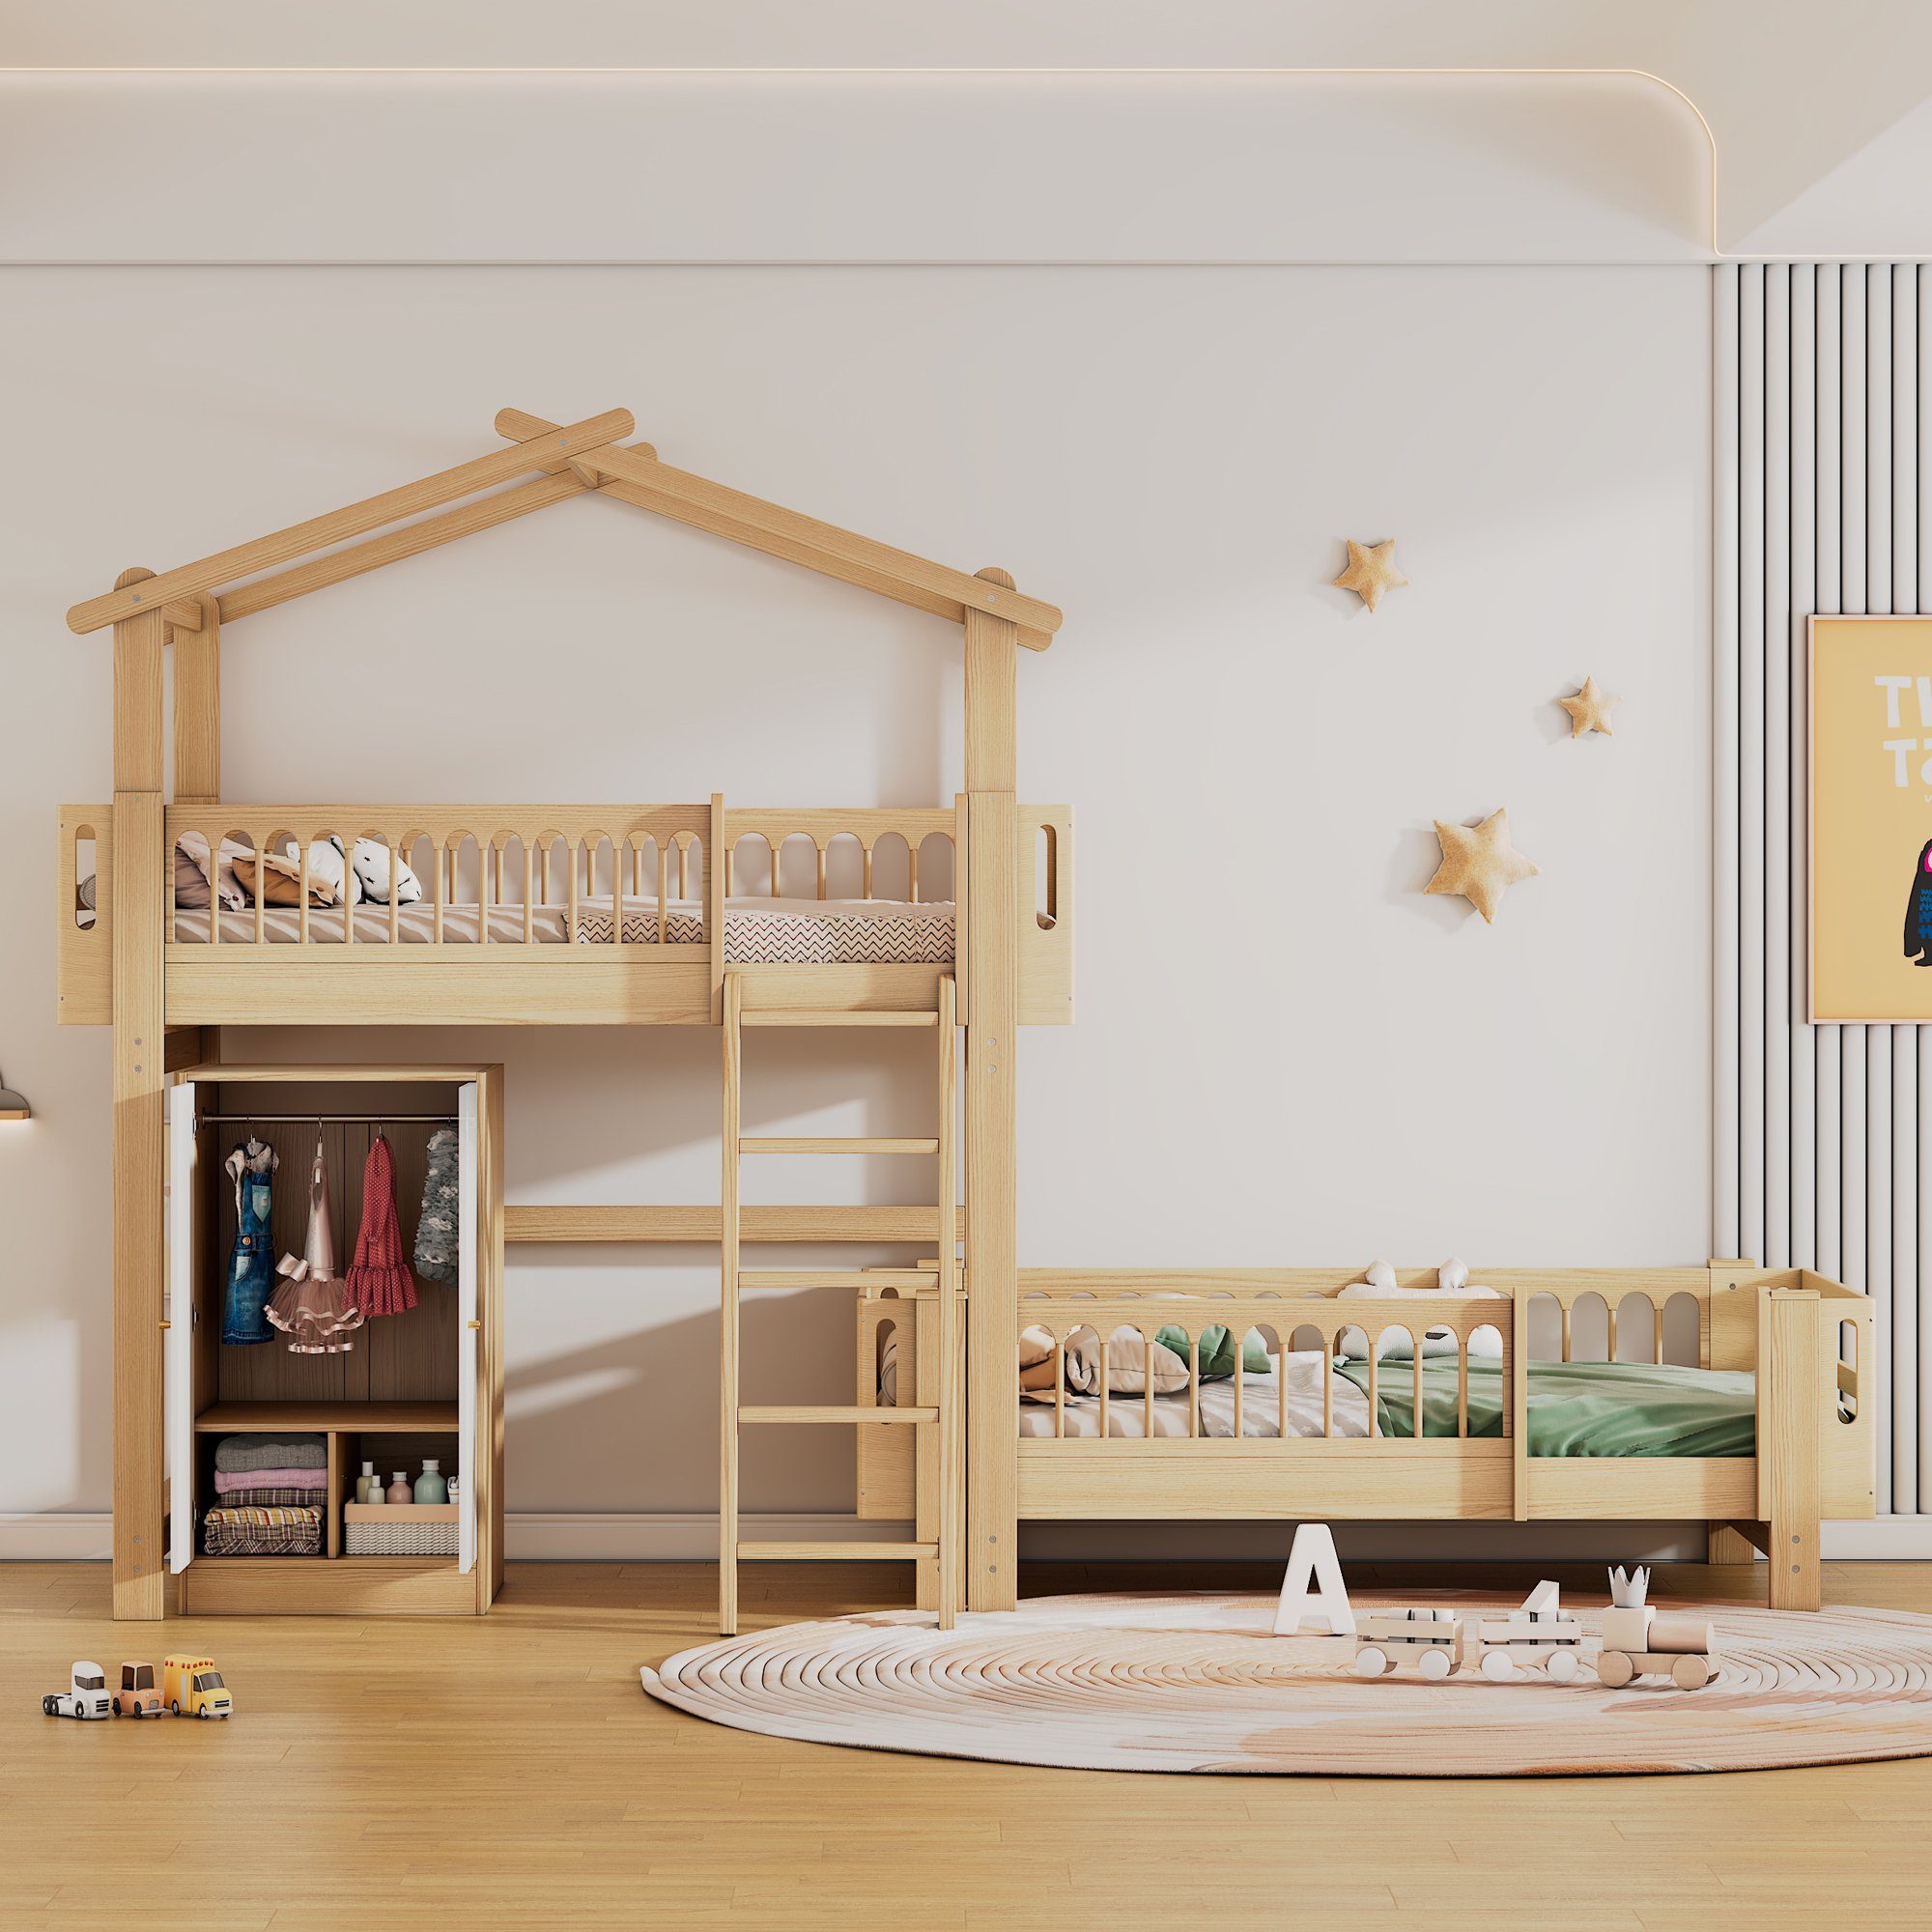 Ulife Etagenbett Hausbett Kinderbett Jugendbett mit Kleiderschrank, herausnehmbares Unterbett,90x200cm